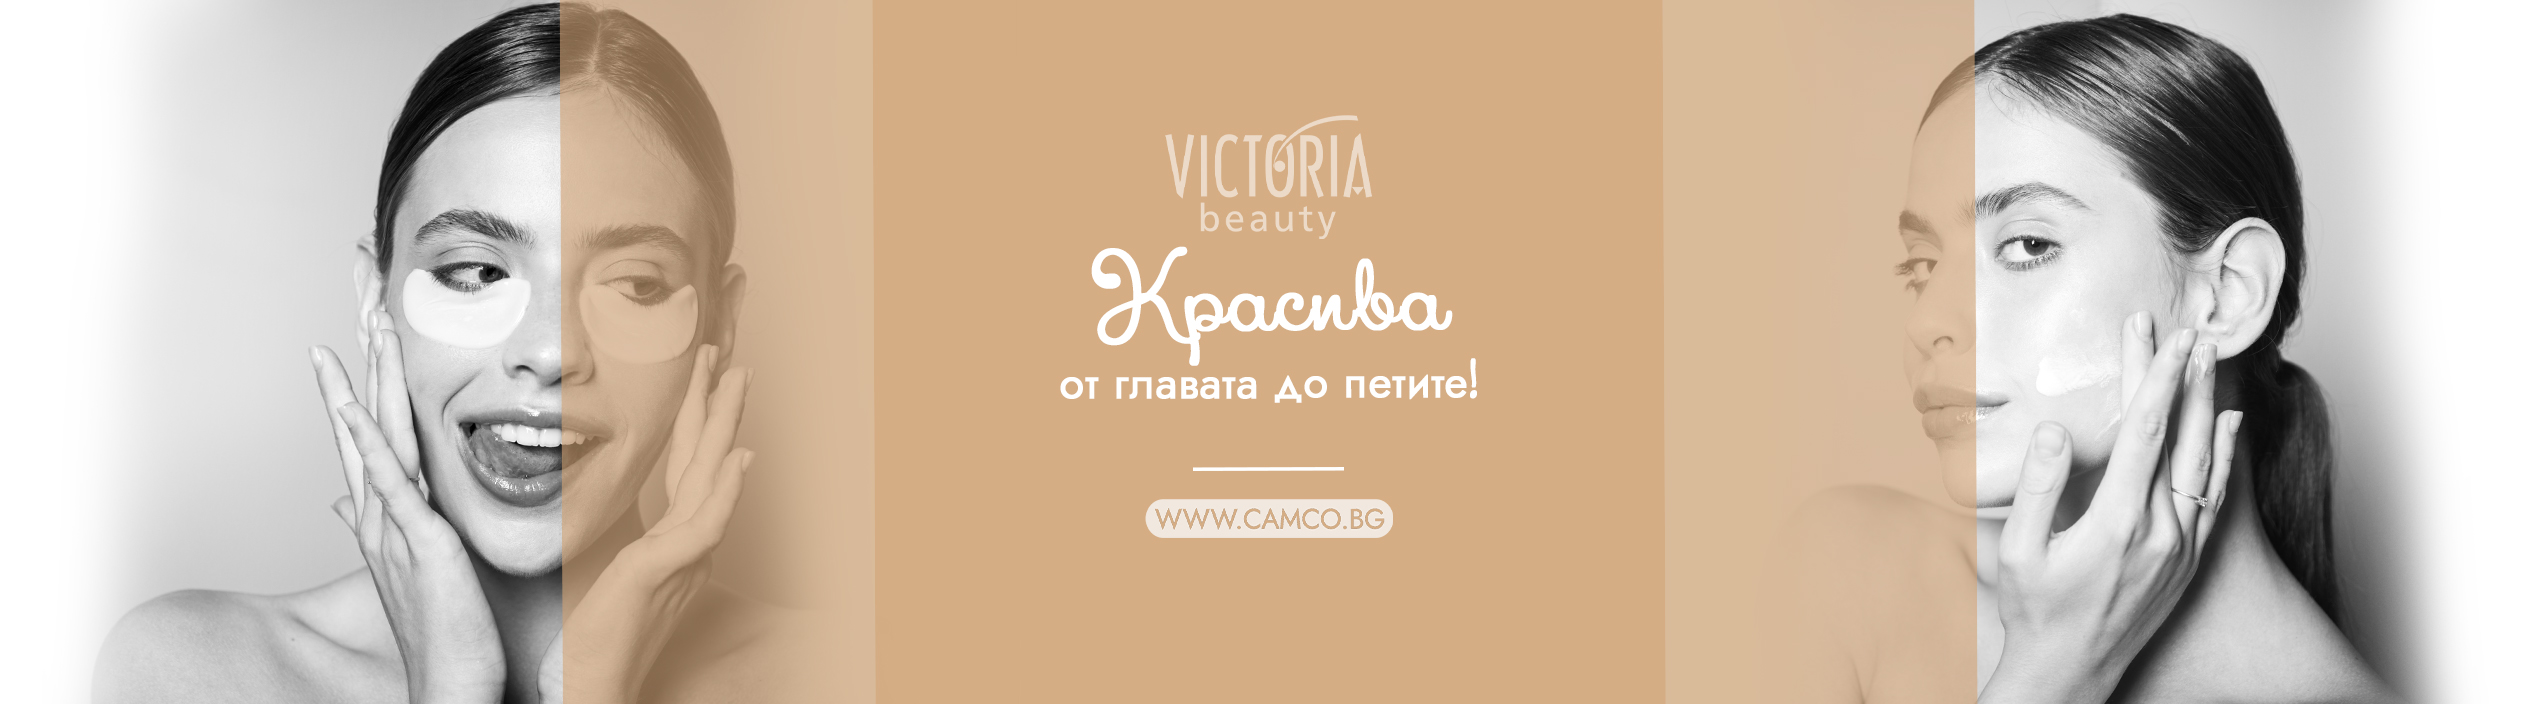 Victoria Beauty